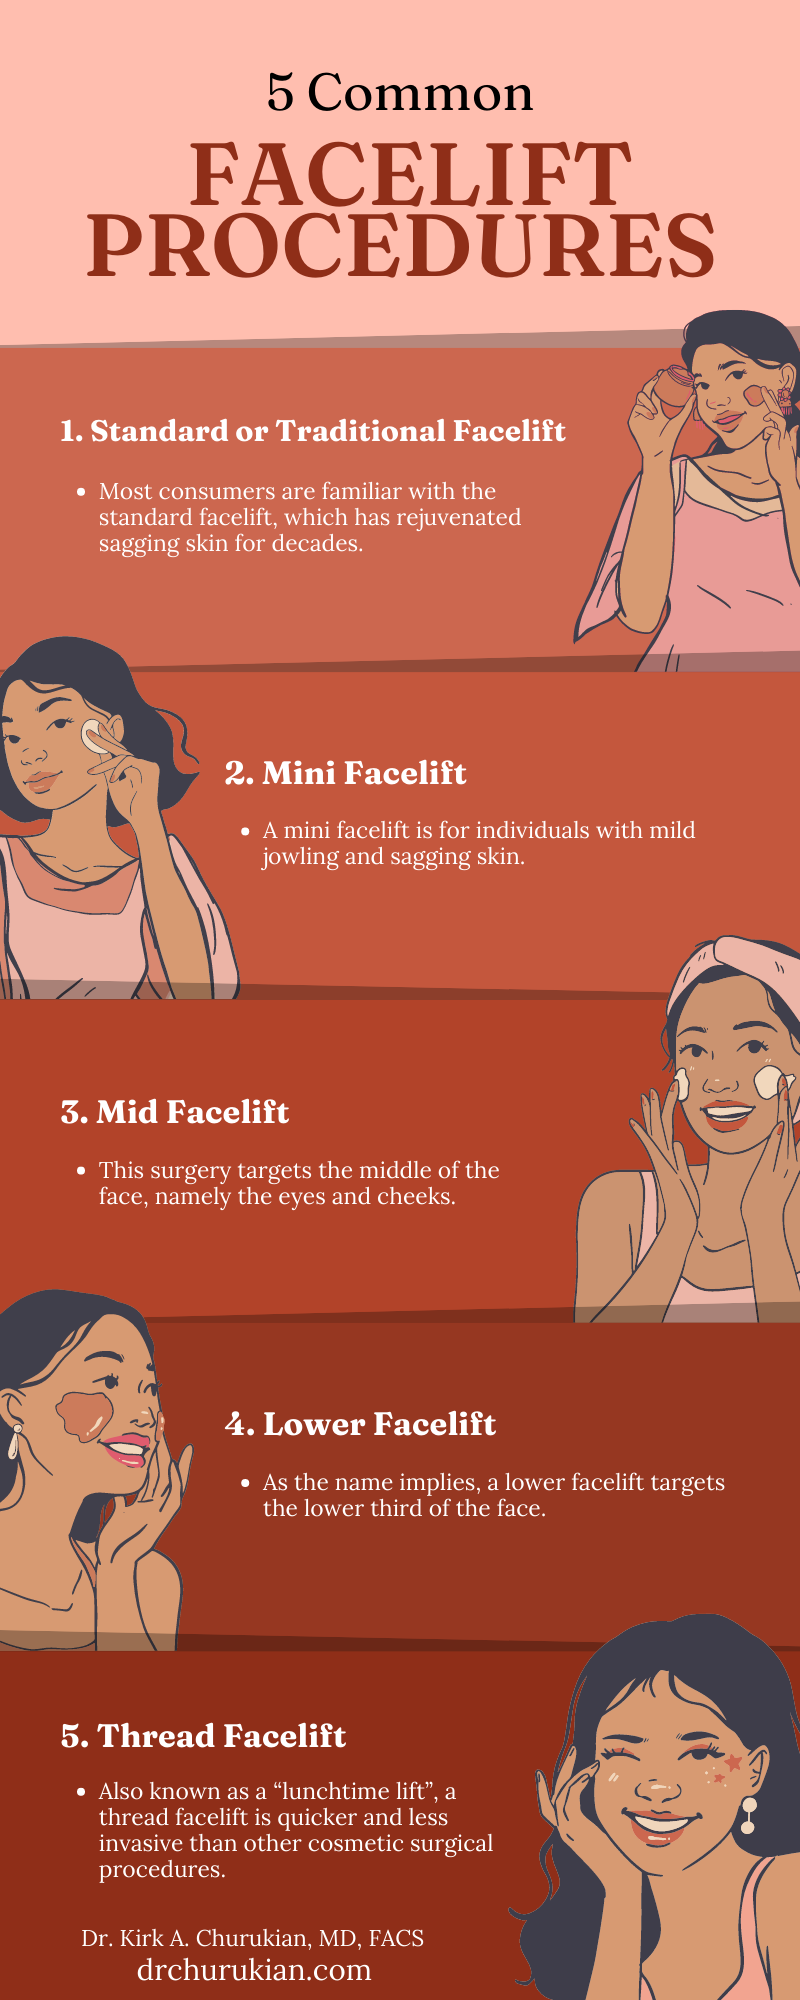 5 Common Facelift Procedures Infographic